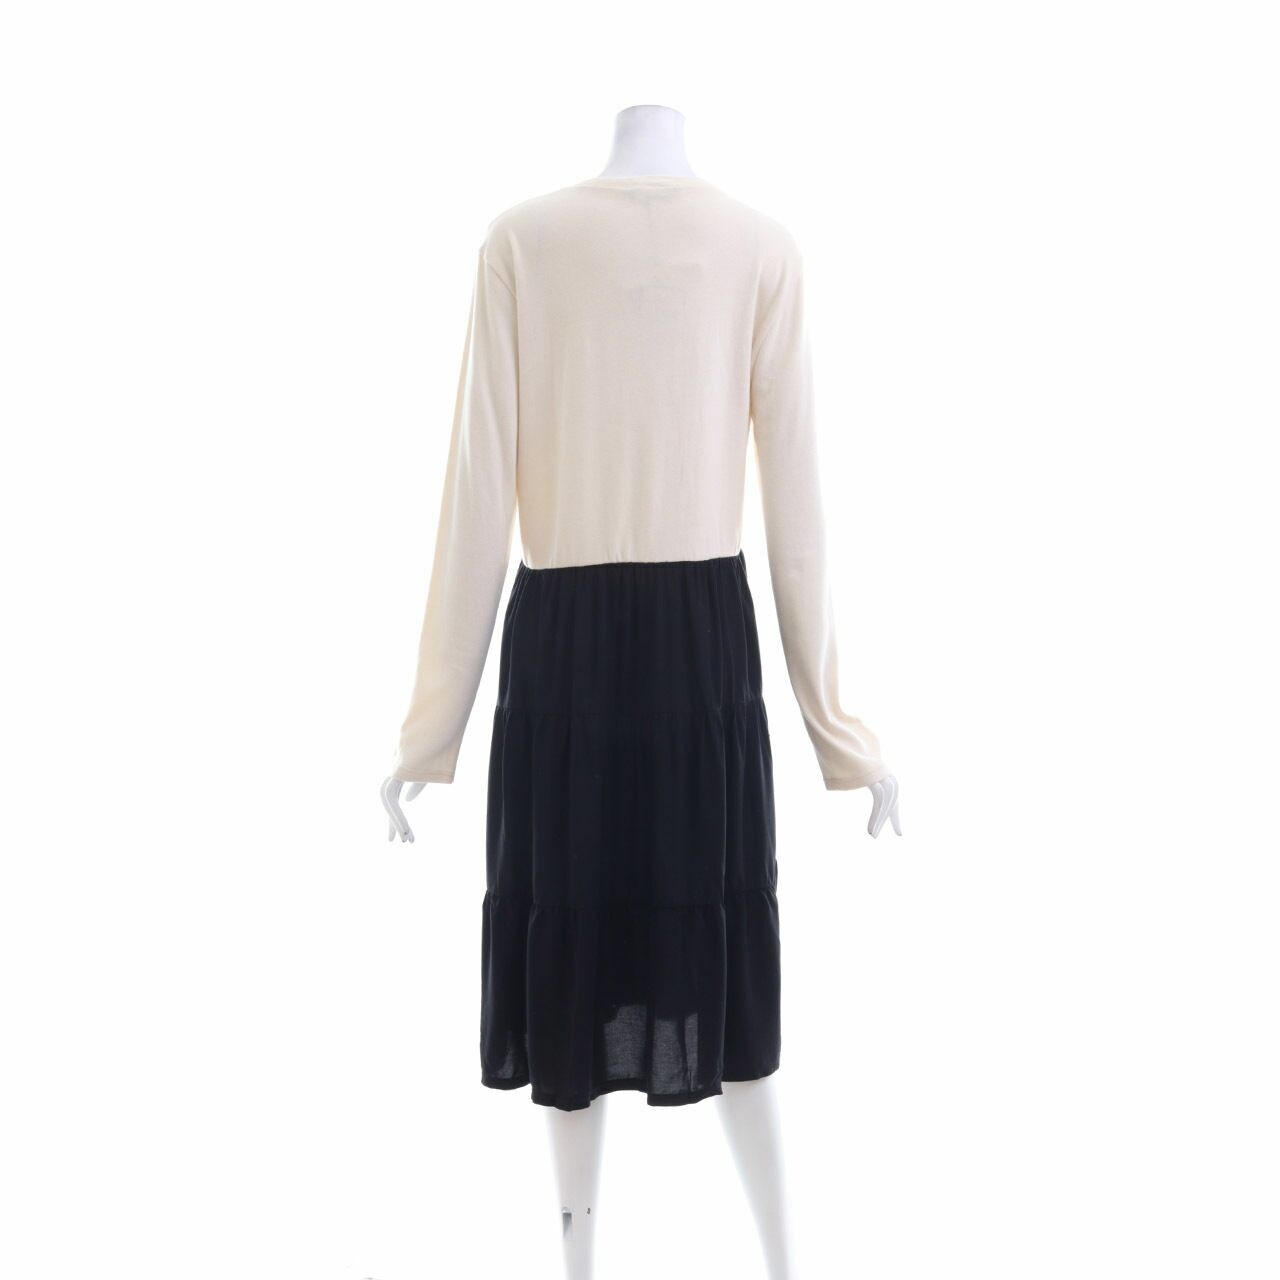 Zara Cream & Black Midi Dress